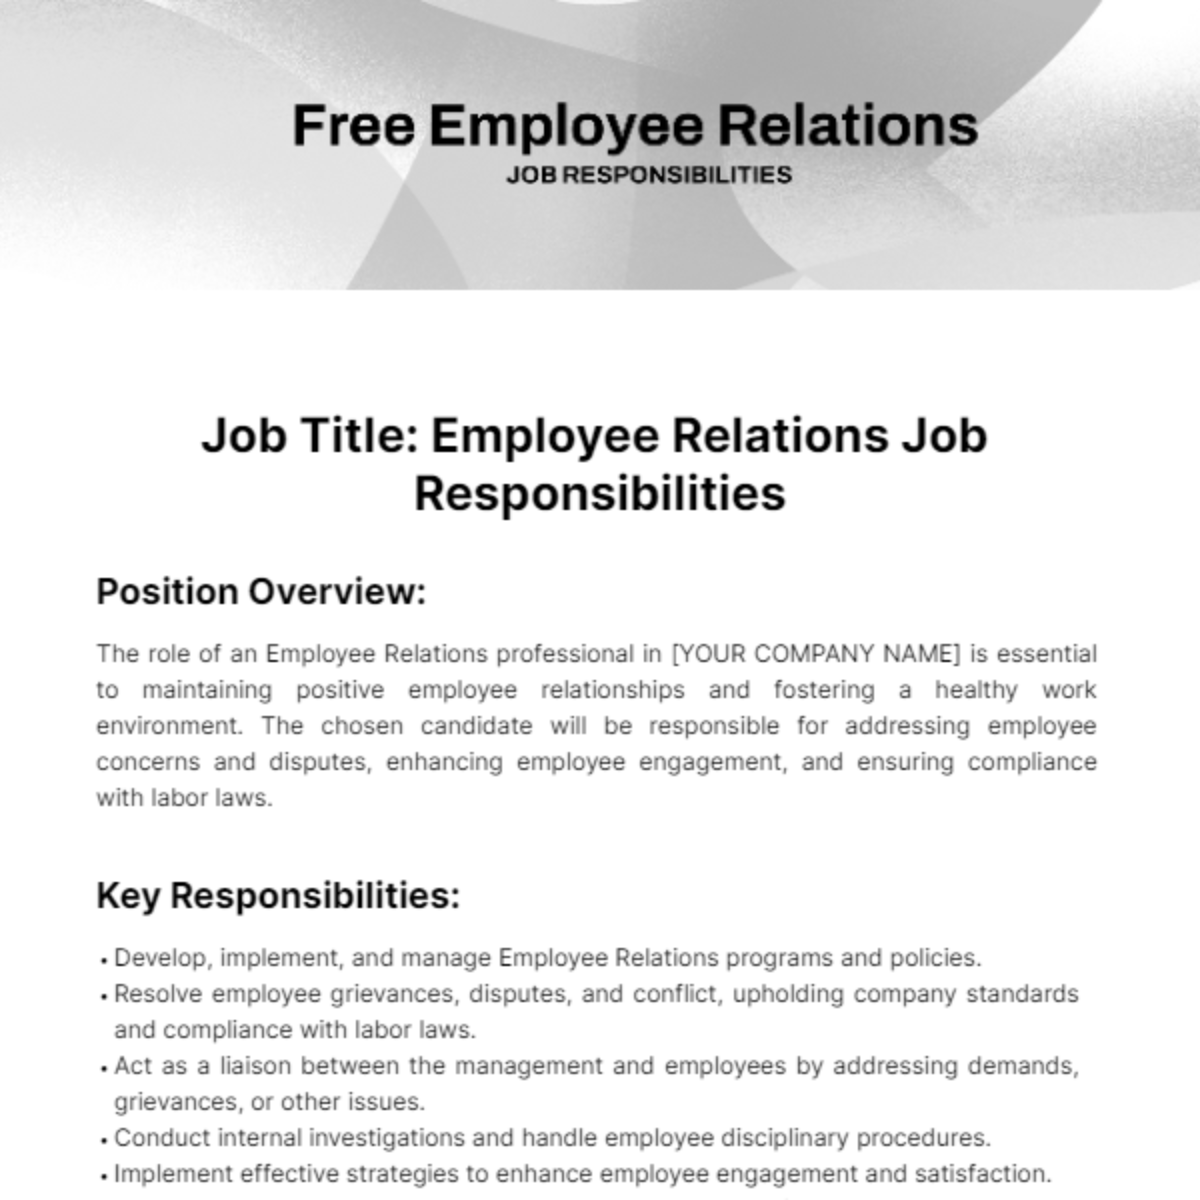 Free Employee Relations Job Responsibilities Template